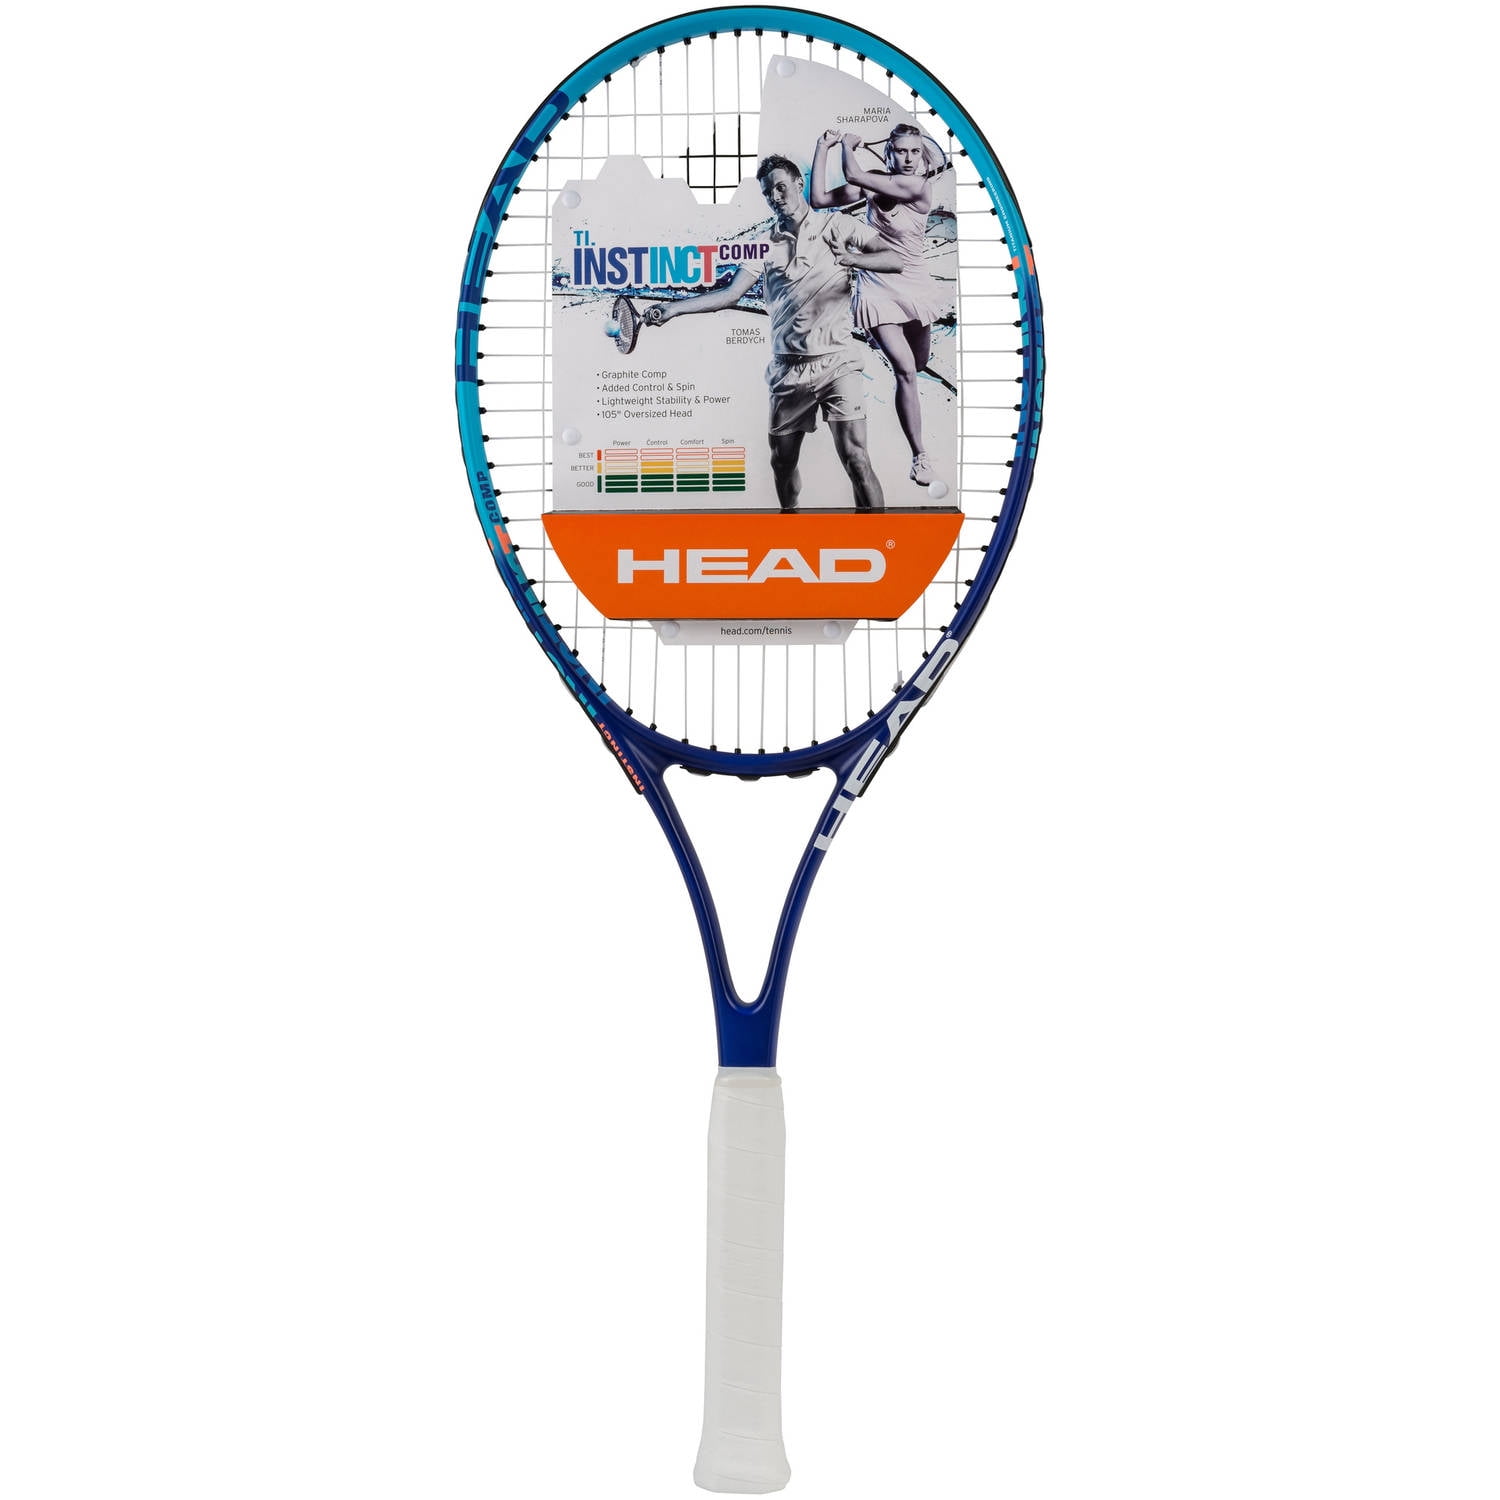 Blue Ti Grip Size 4 1/4 In HEAD Pre-Strung Tennis Racket Instinct Comp 